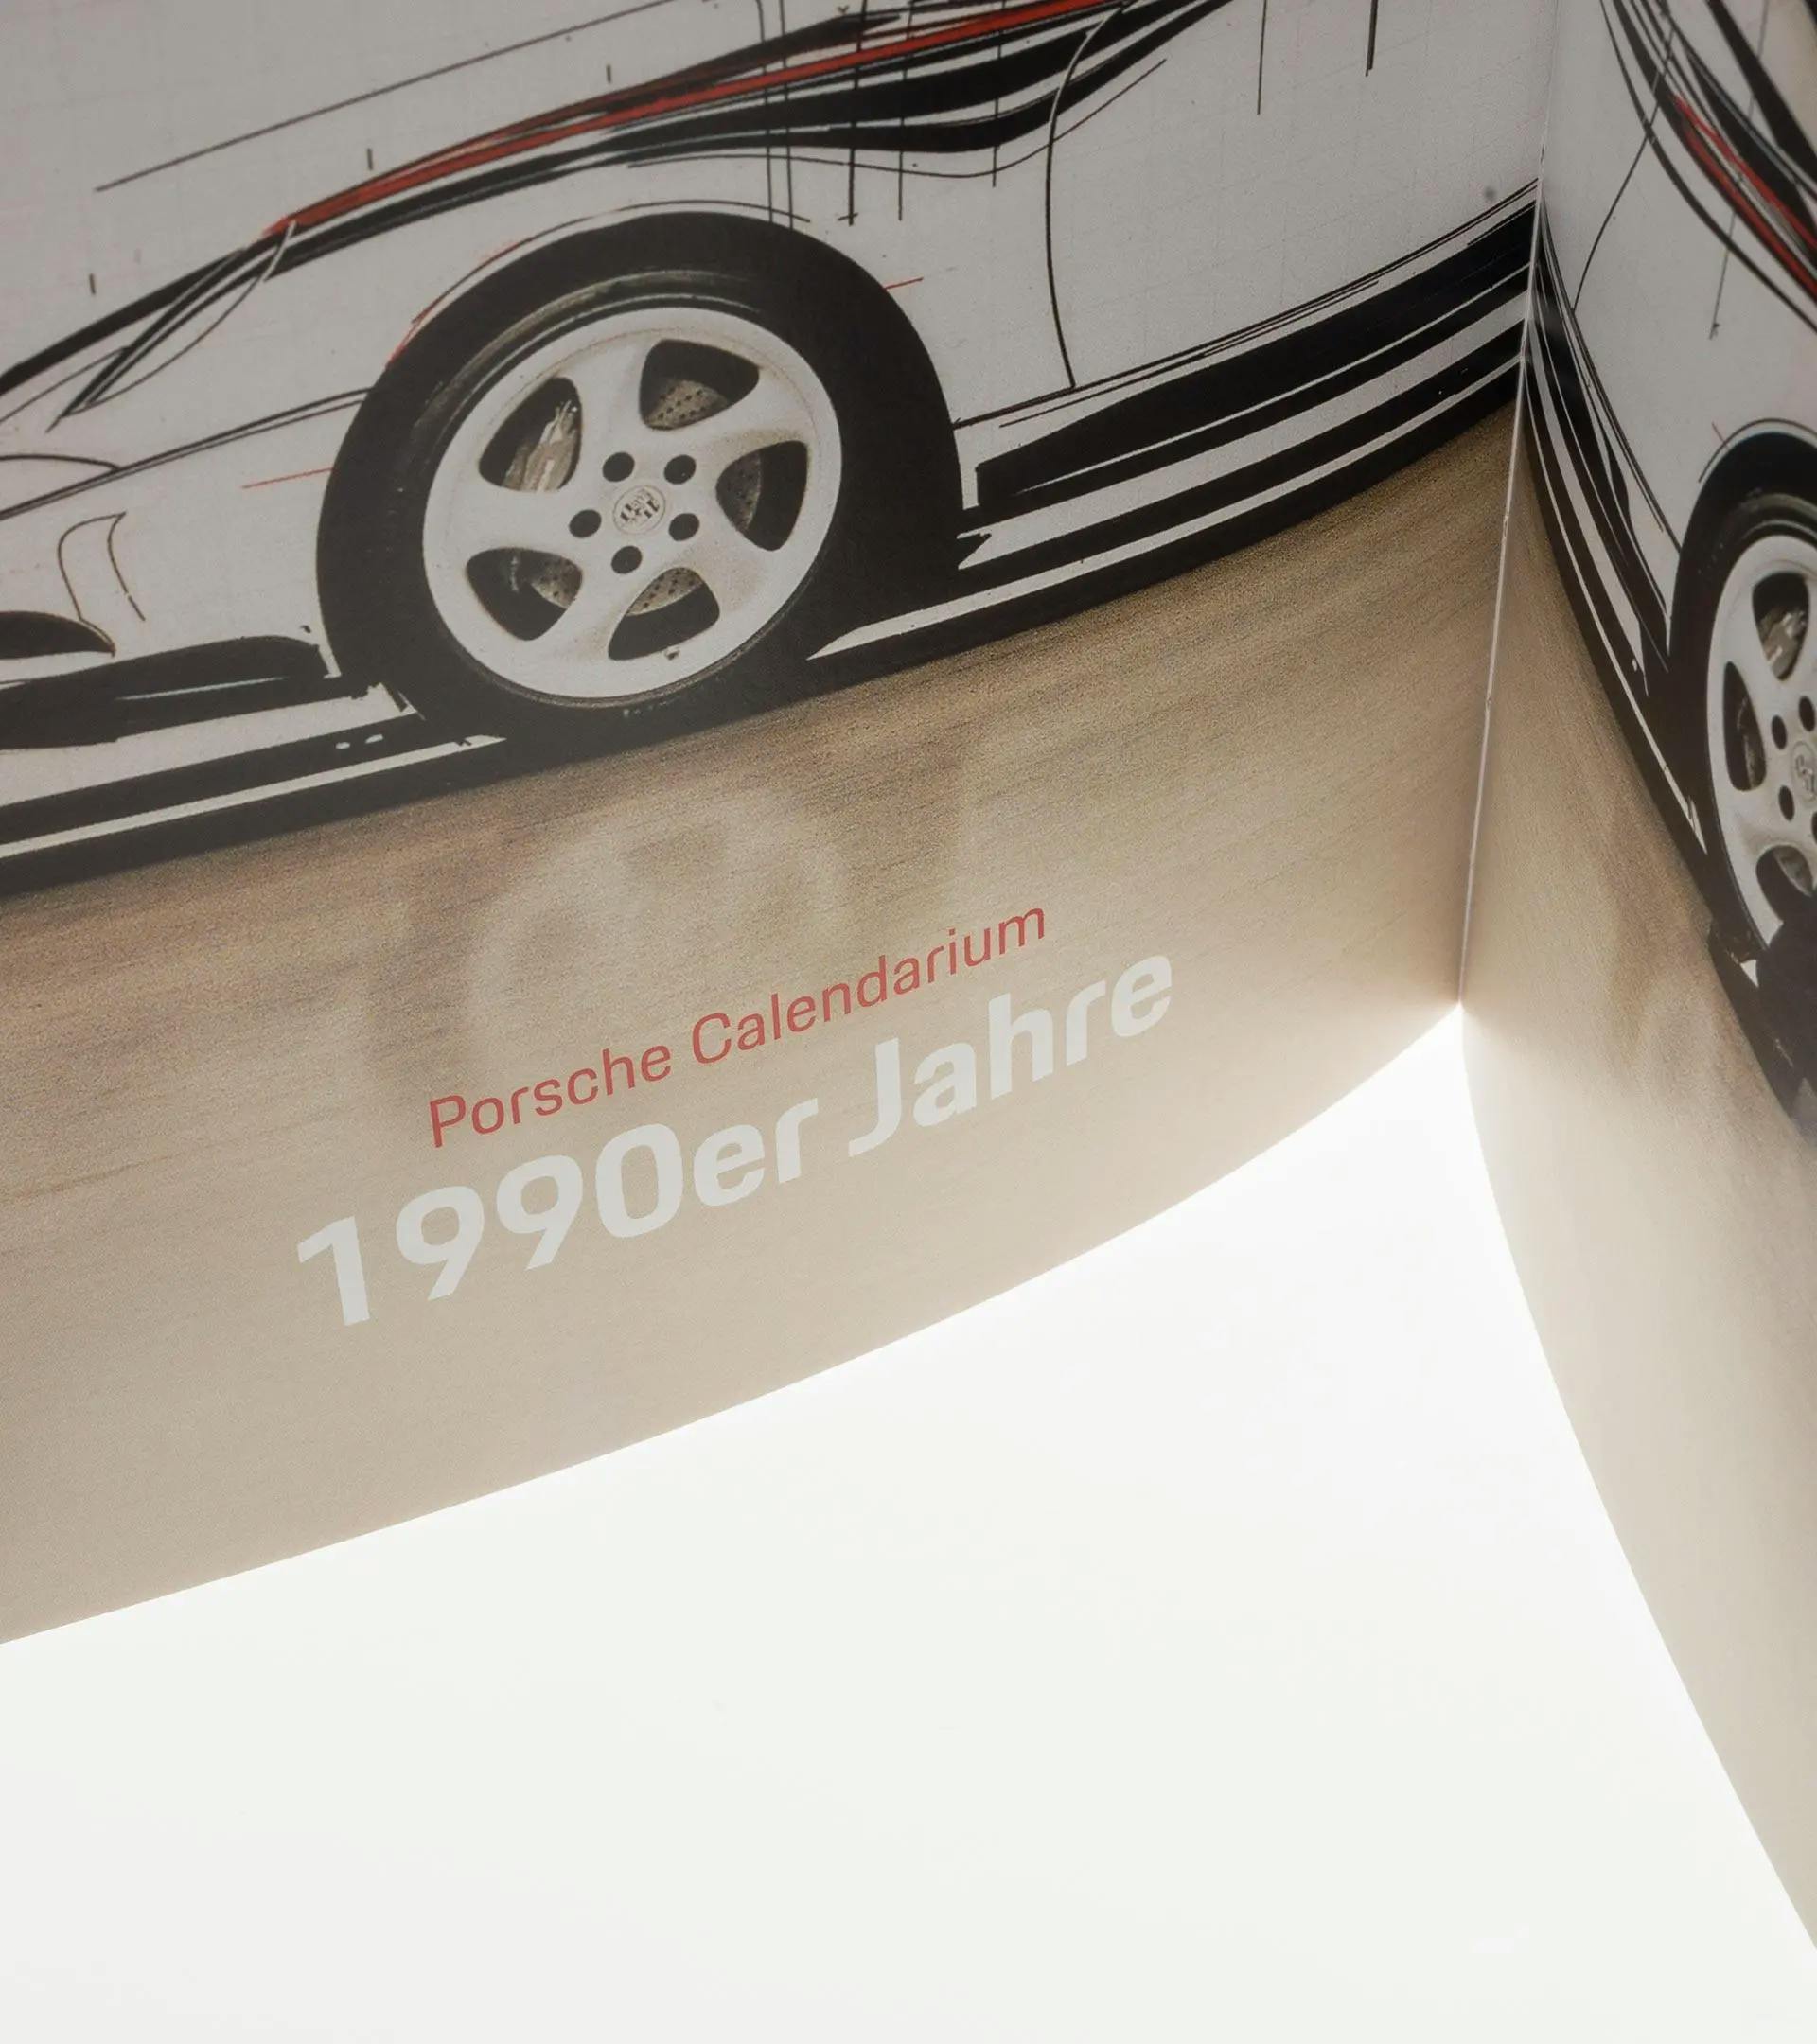 Buch Porsche Calendarium (EPM) 3